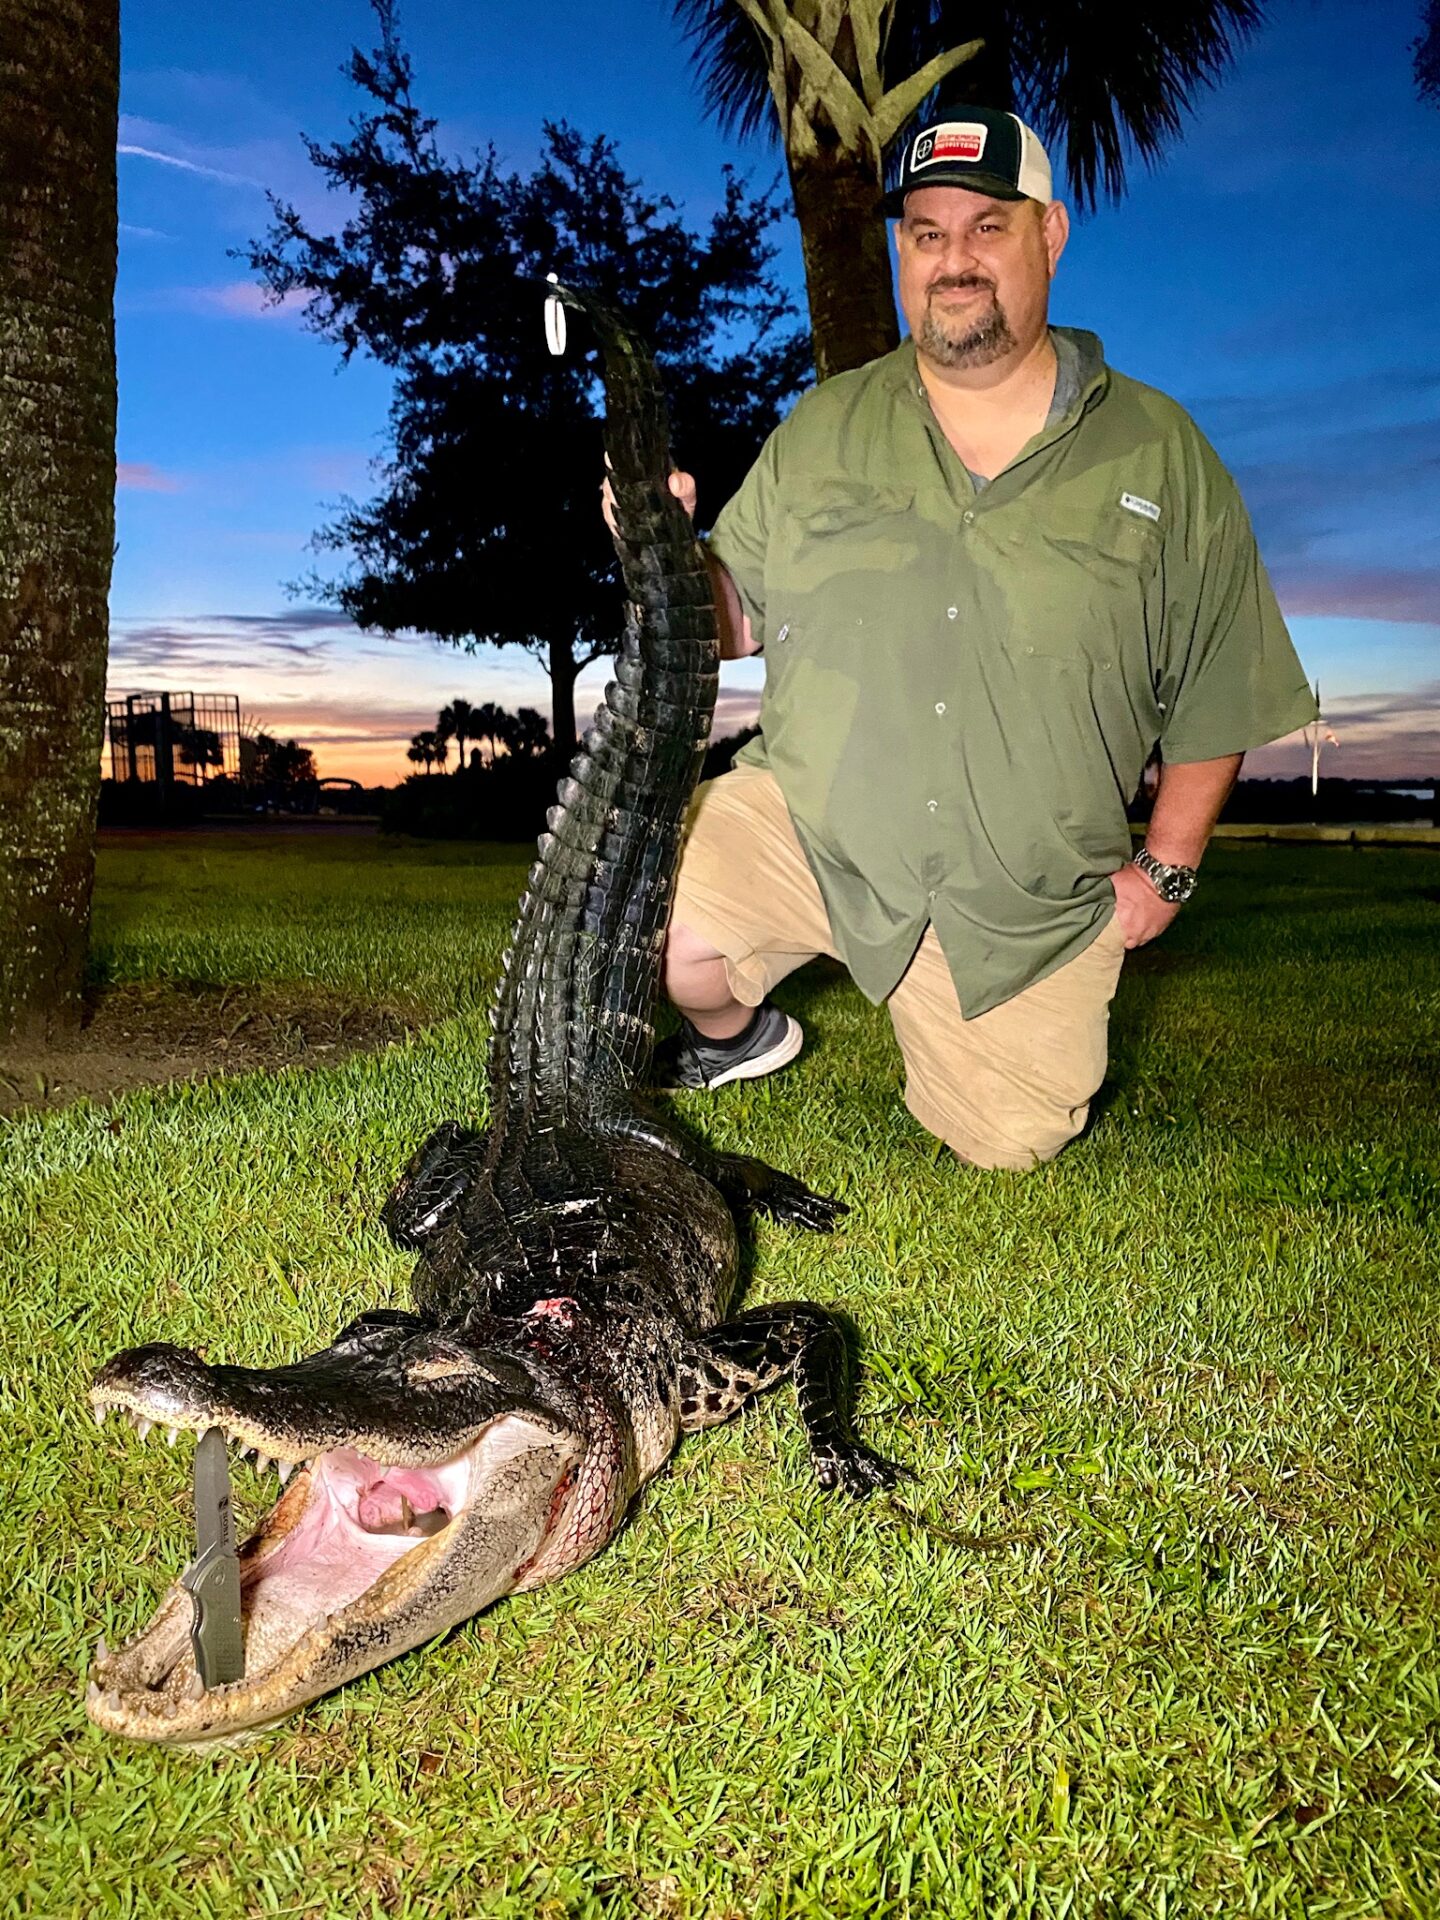 cheap alligator hunting trips florida